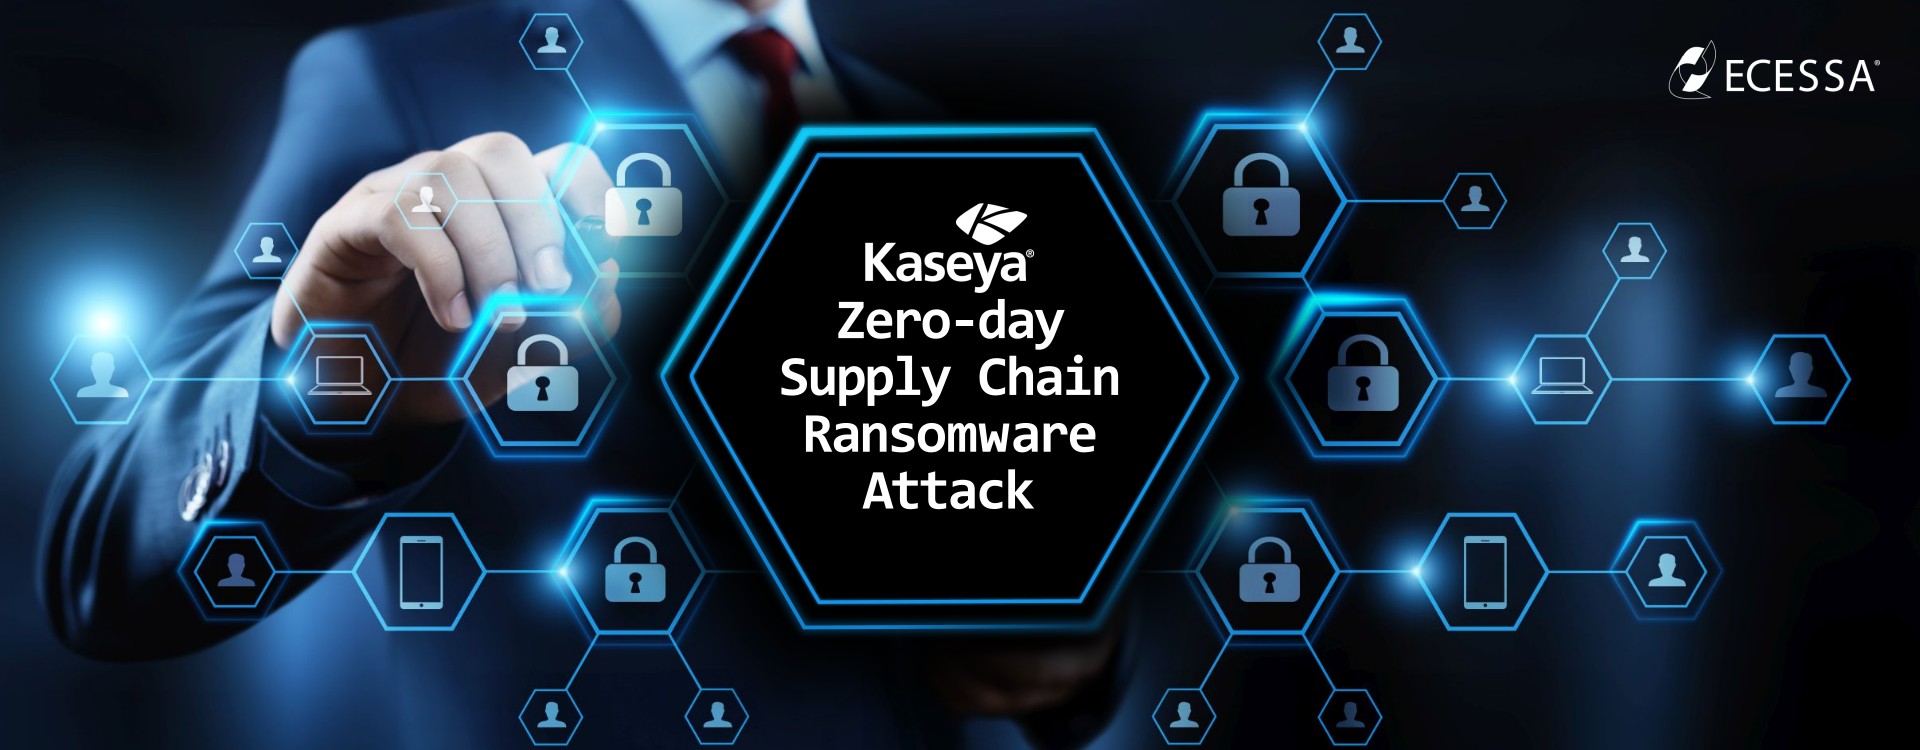 Kaseya ransomware attack banner